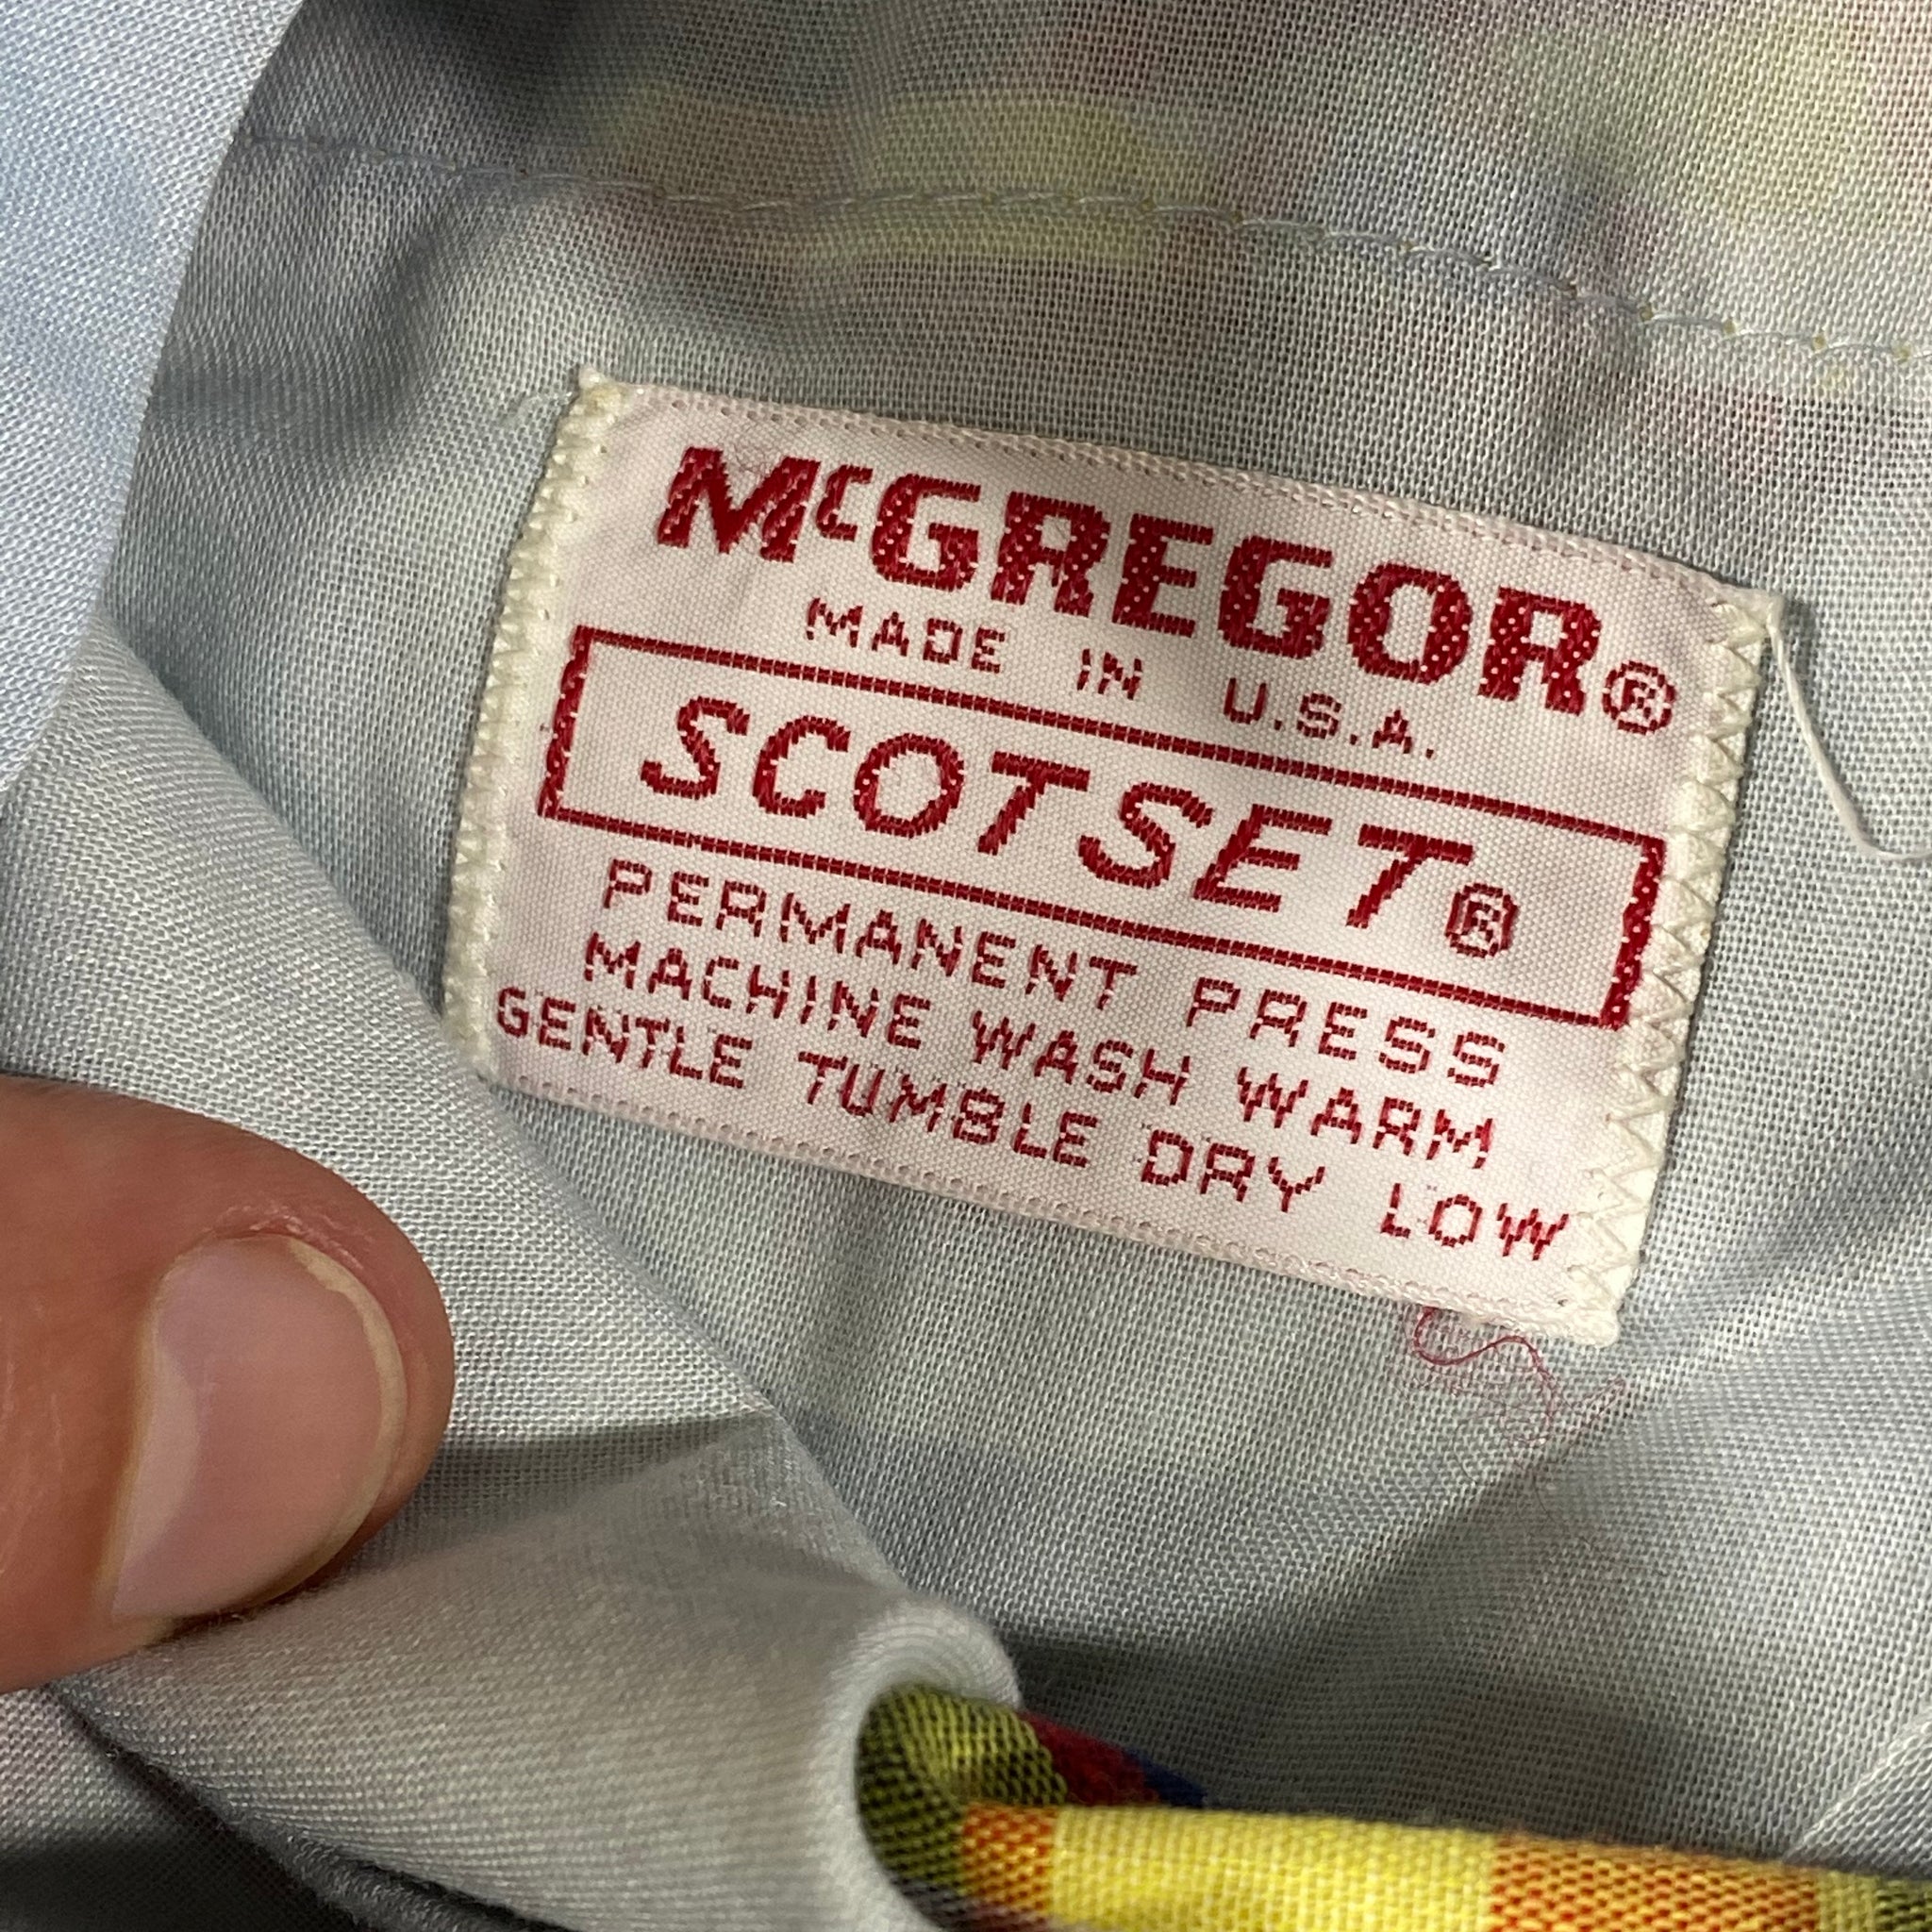 80s Mcgregor plaid shorts sz36